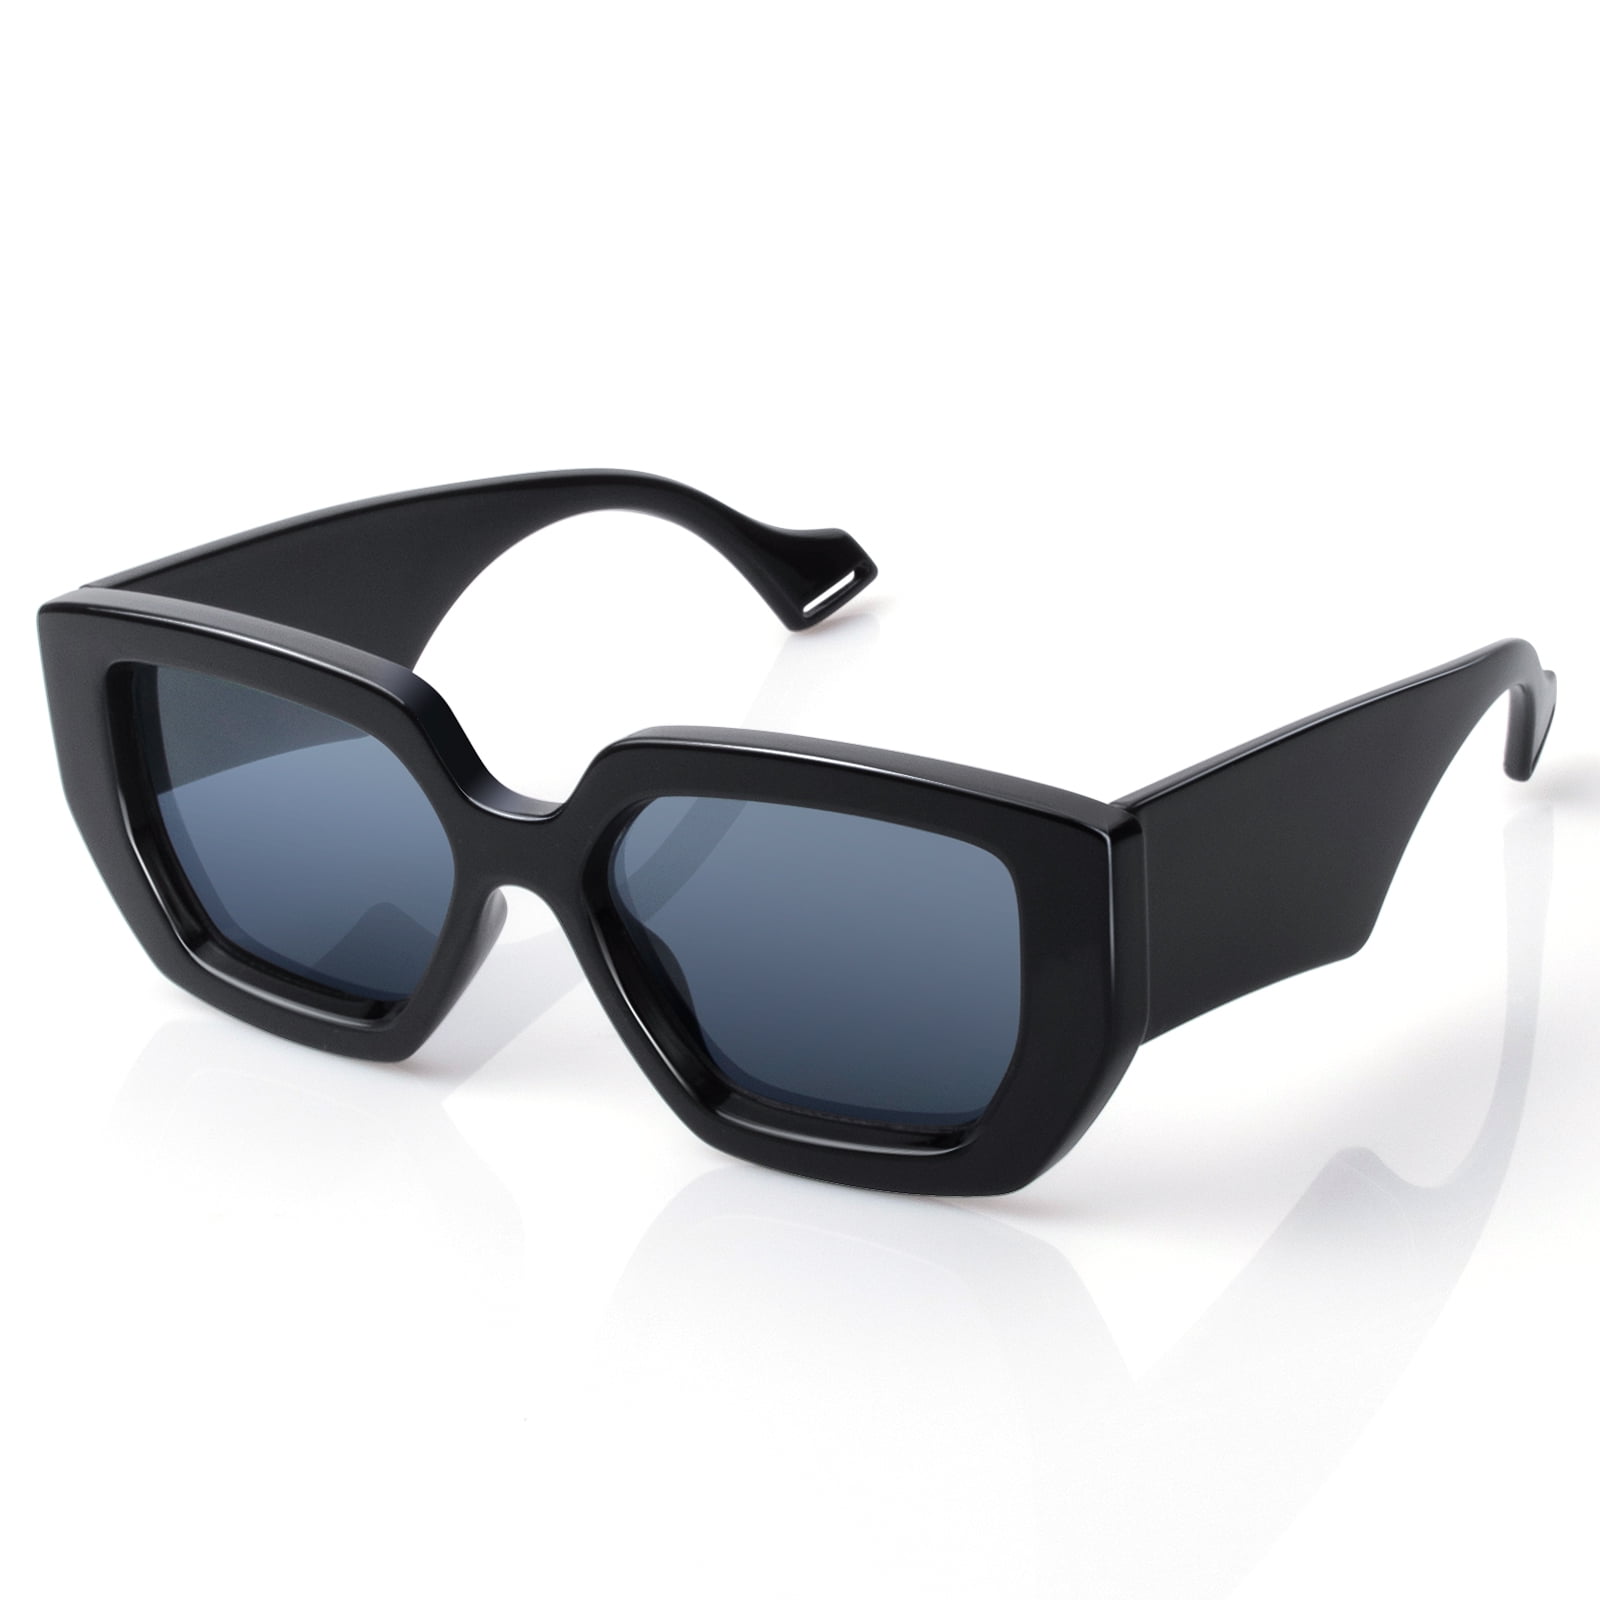 Photochromic Sunglasses Men Polarized Driving Chameleon Glasses Male Change  Color Sun Glasses Day Night Vision Driver's Eyewear 